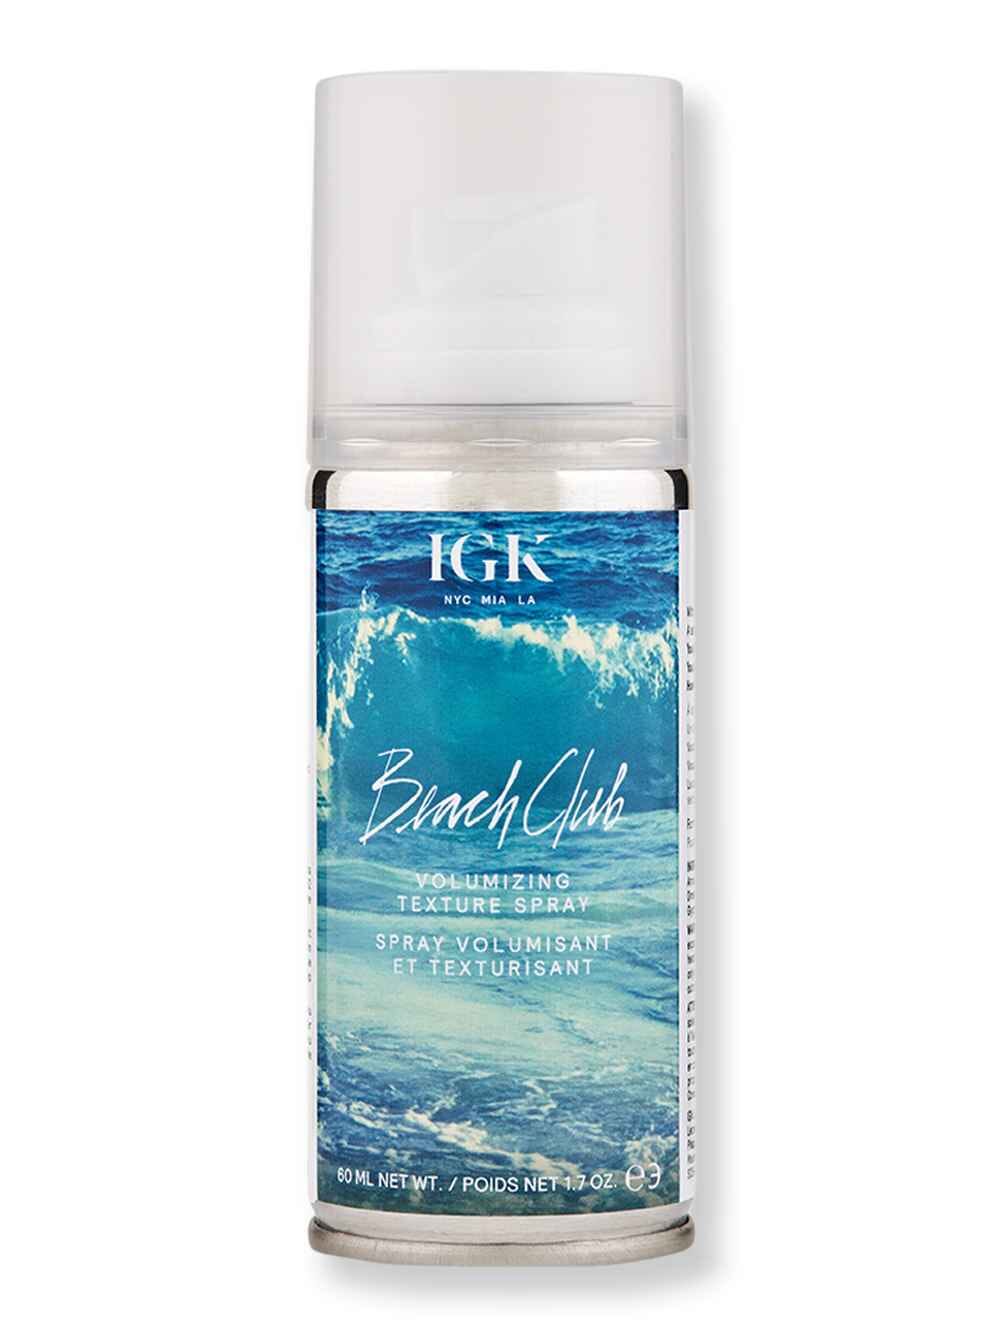 Igk Beach Club Texture Spray